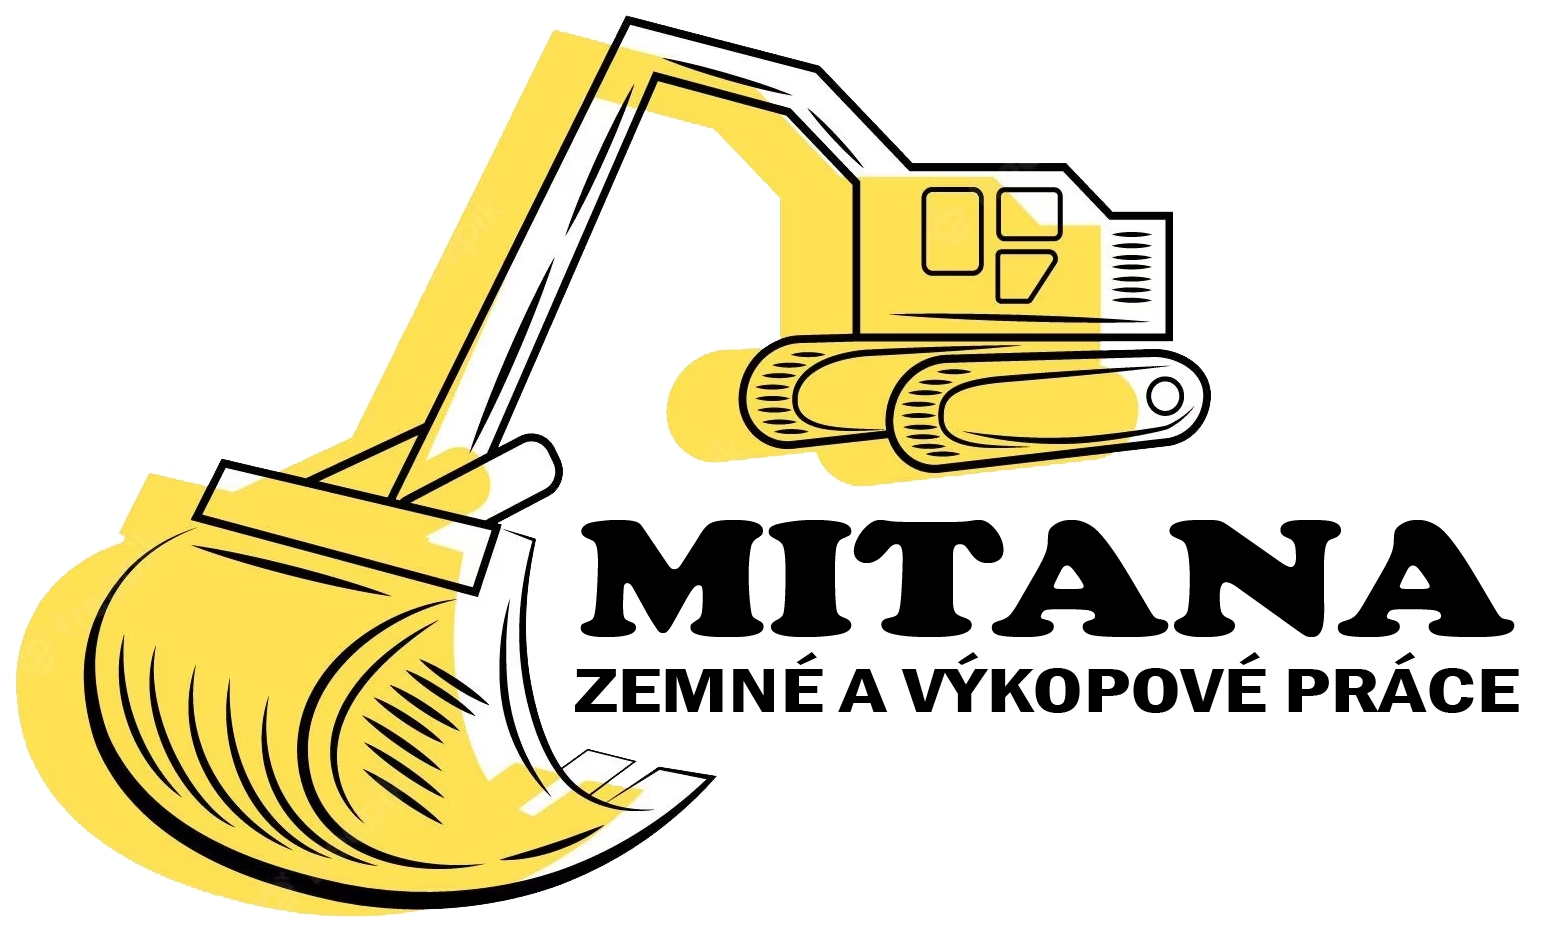 Zemné a výkopové práce - Kontakty na Ľubomír Mitana